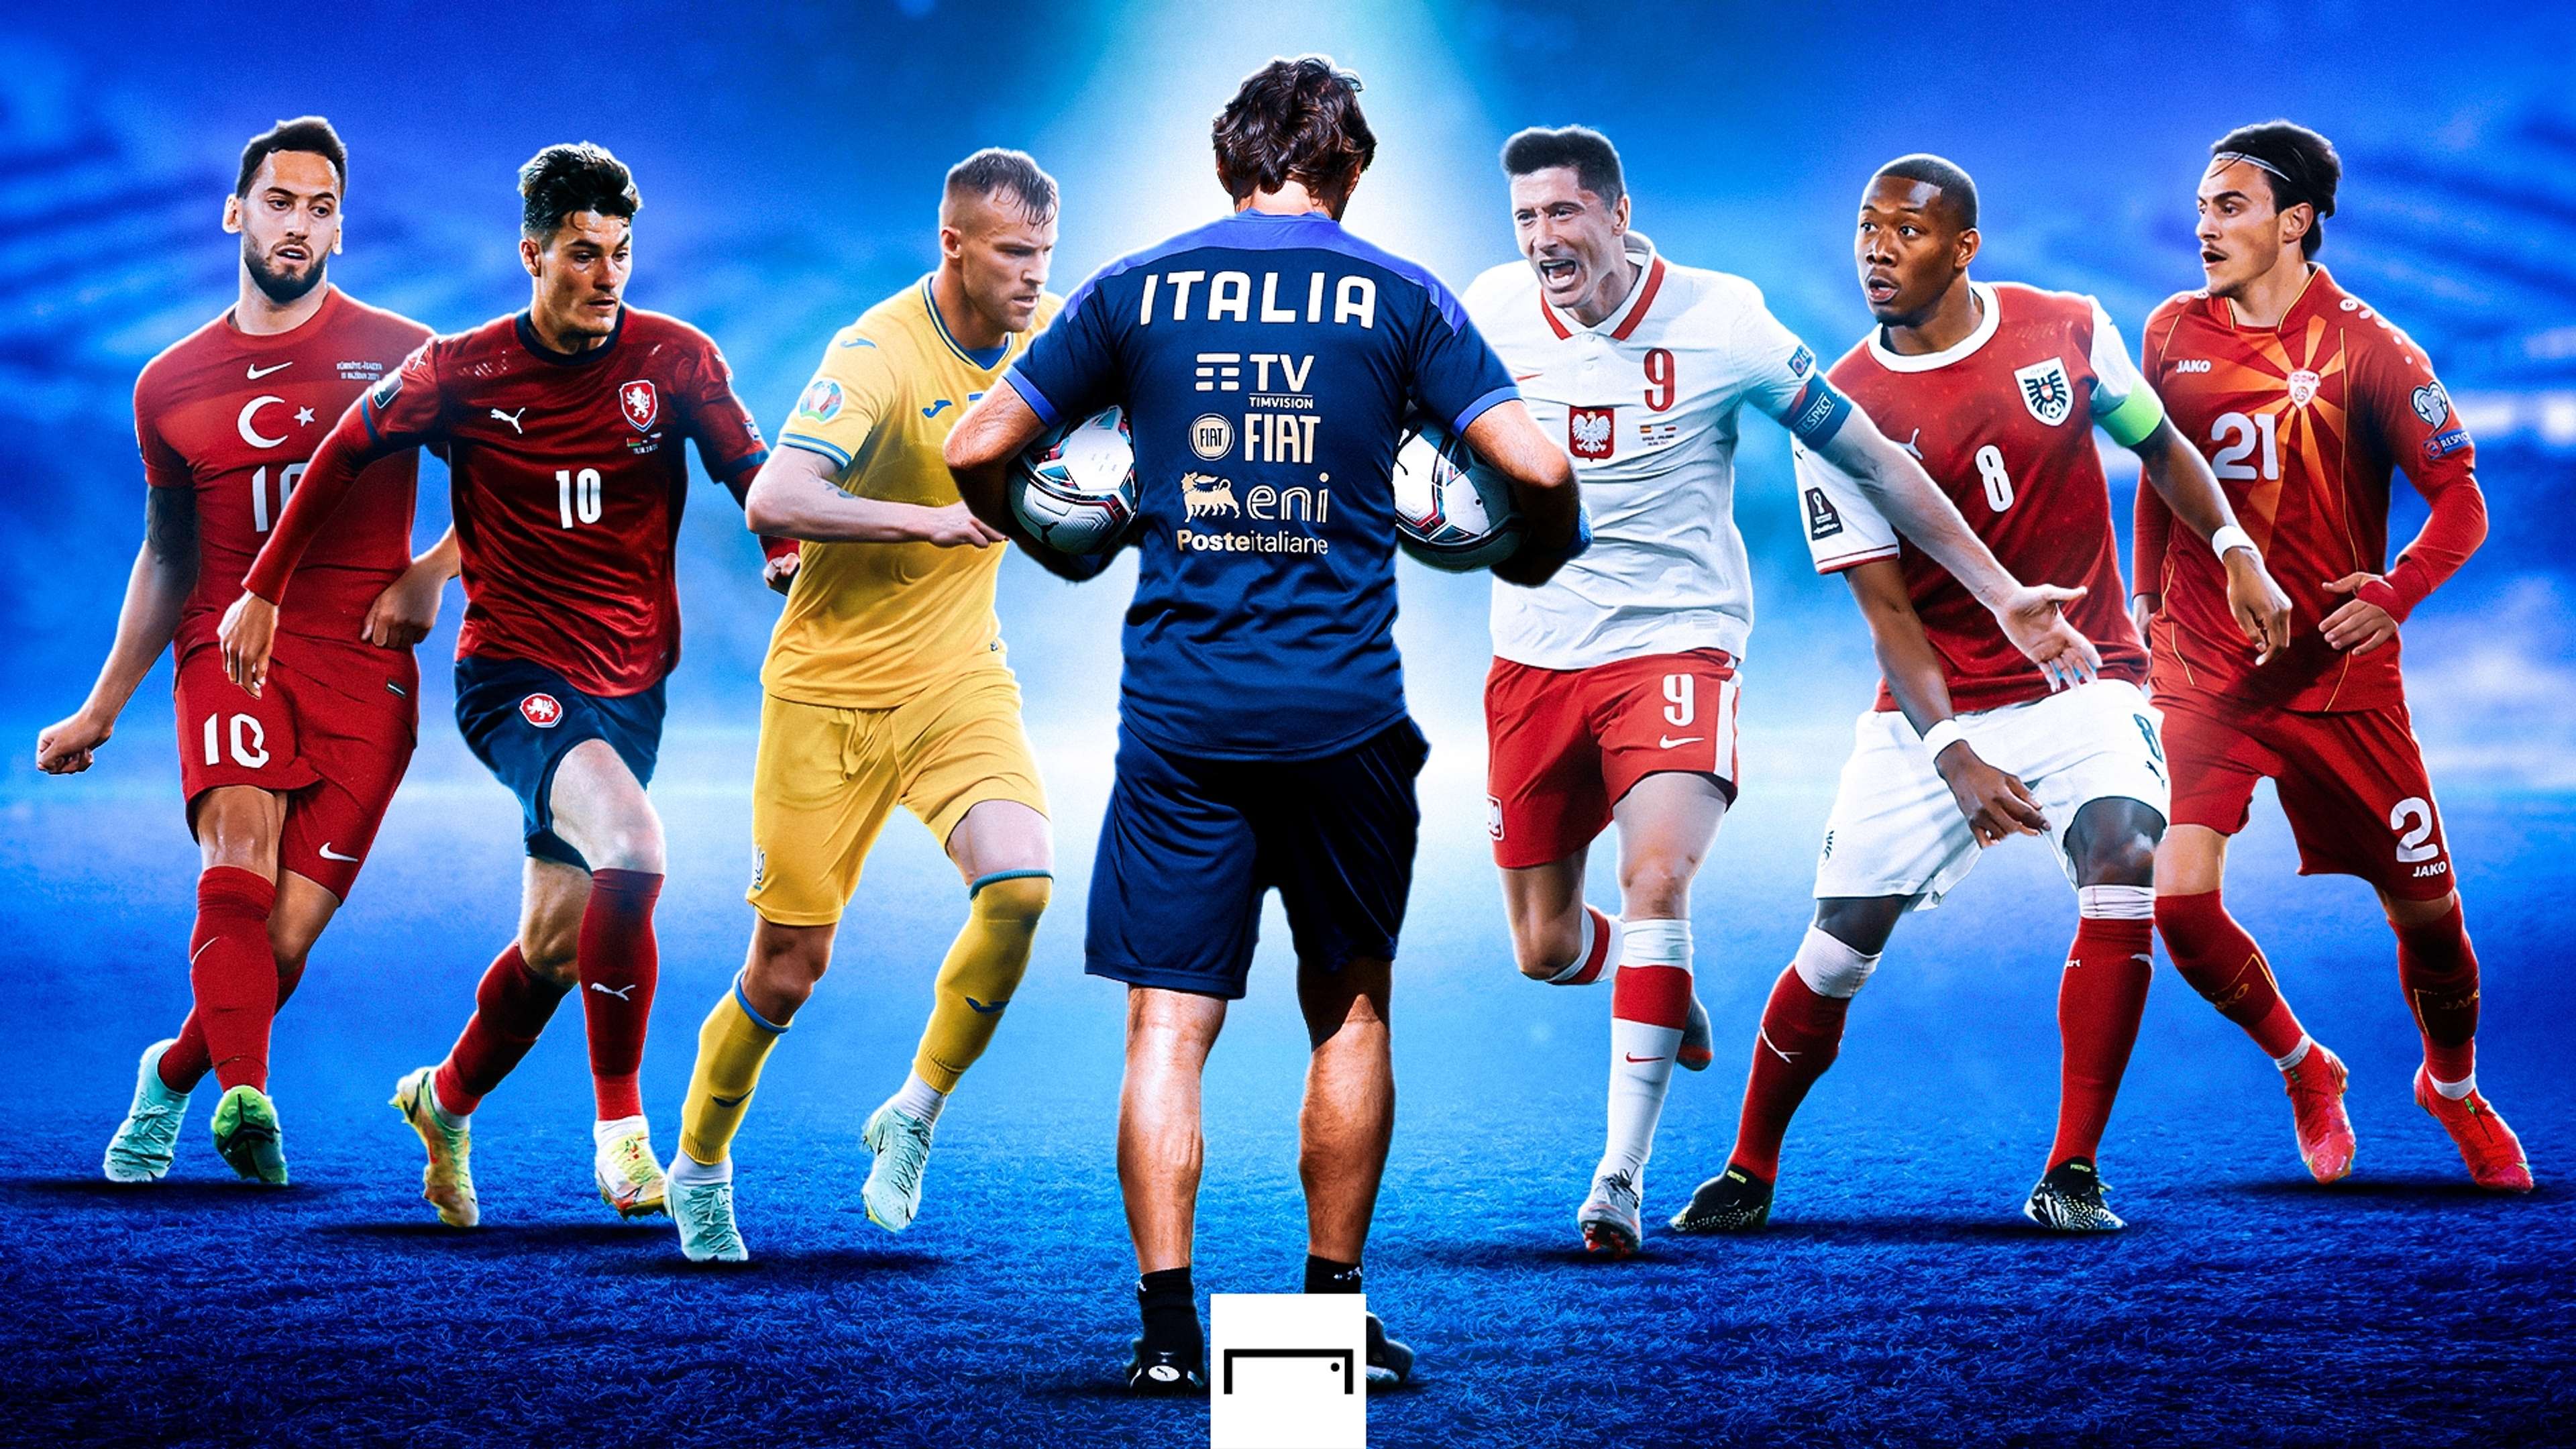 Italy playoffs gfx